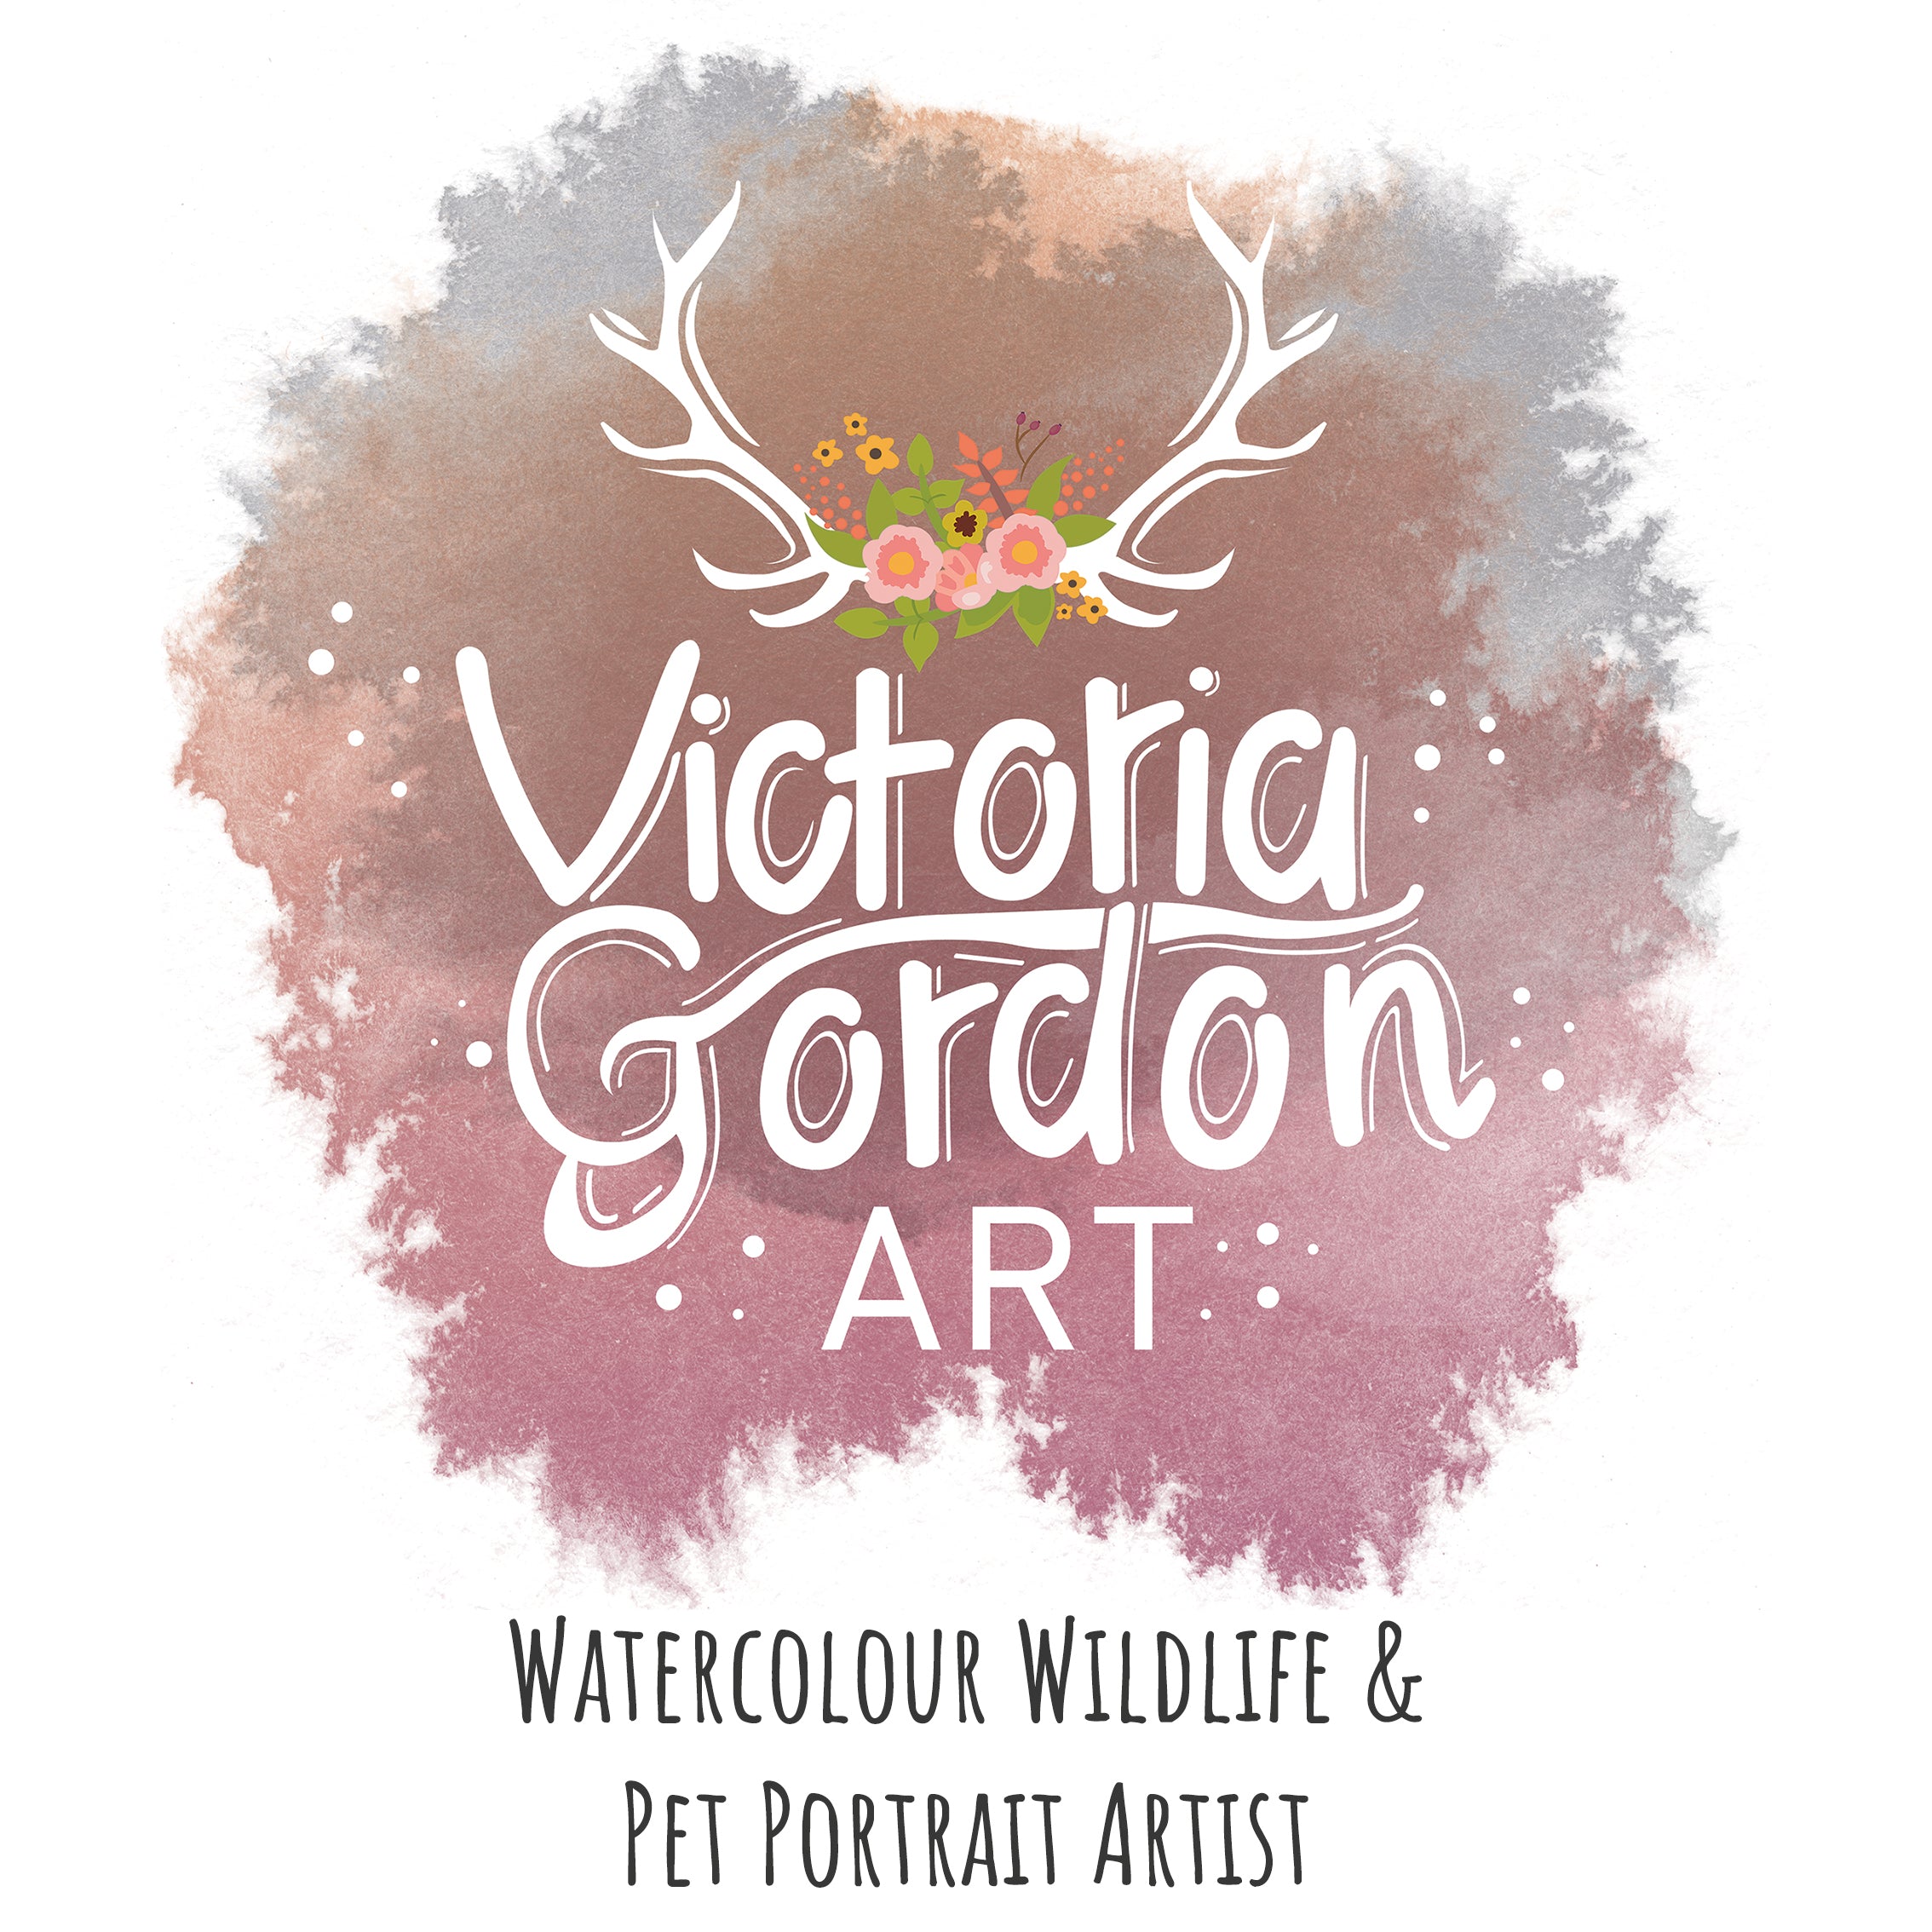 Victoria Gordon Art